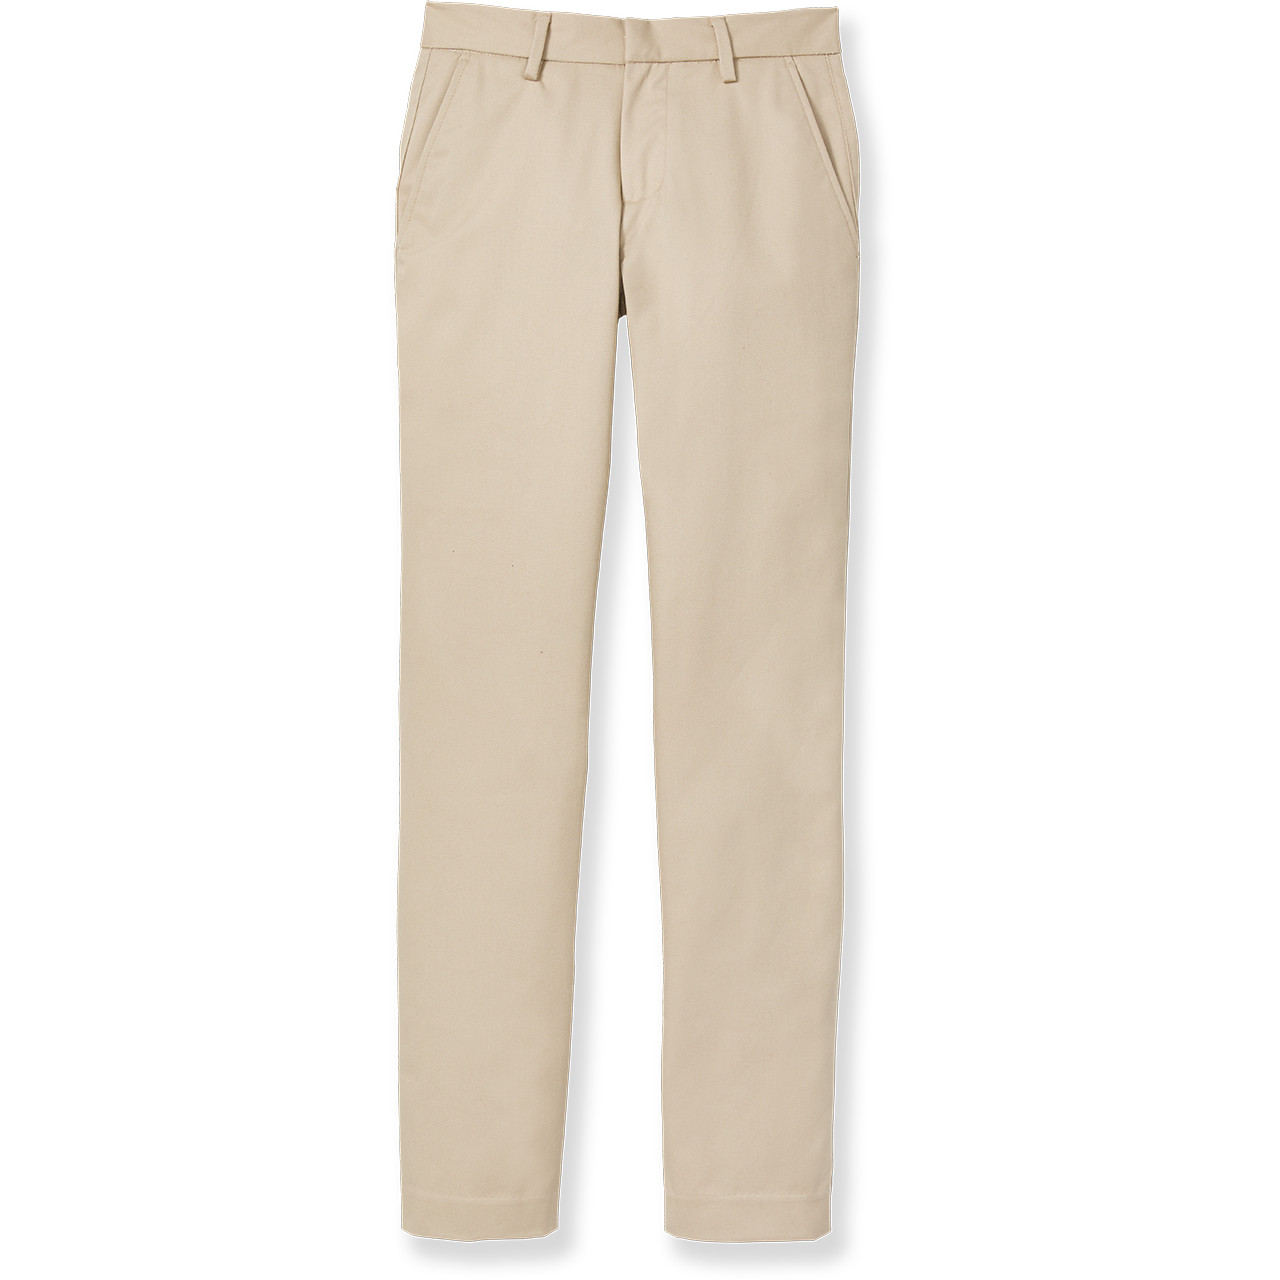 Heavyweight Sweatpants with heat transferred logo [NY467-865/LDL-OXFORD] -  FlynnO'Hara Uniforms